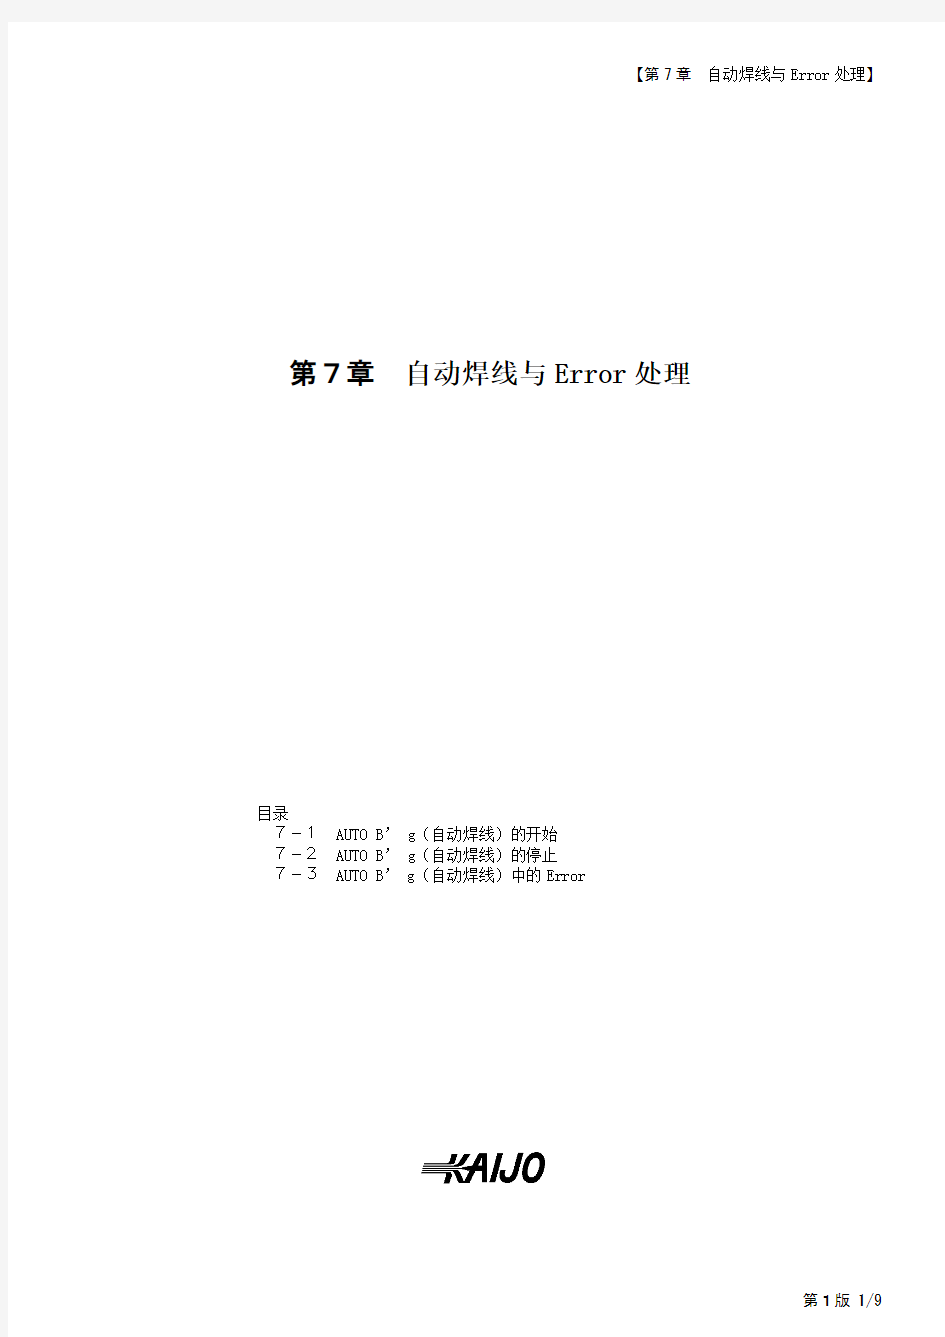 KAIJO焊线机FB-900的中文说明书09_Chapt_7 Auto Bonding and Error(C)(1st)